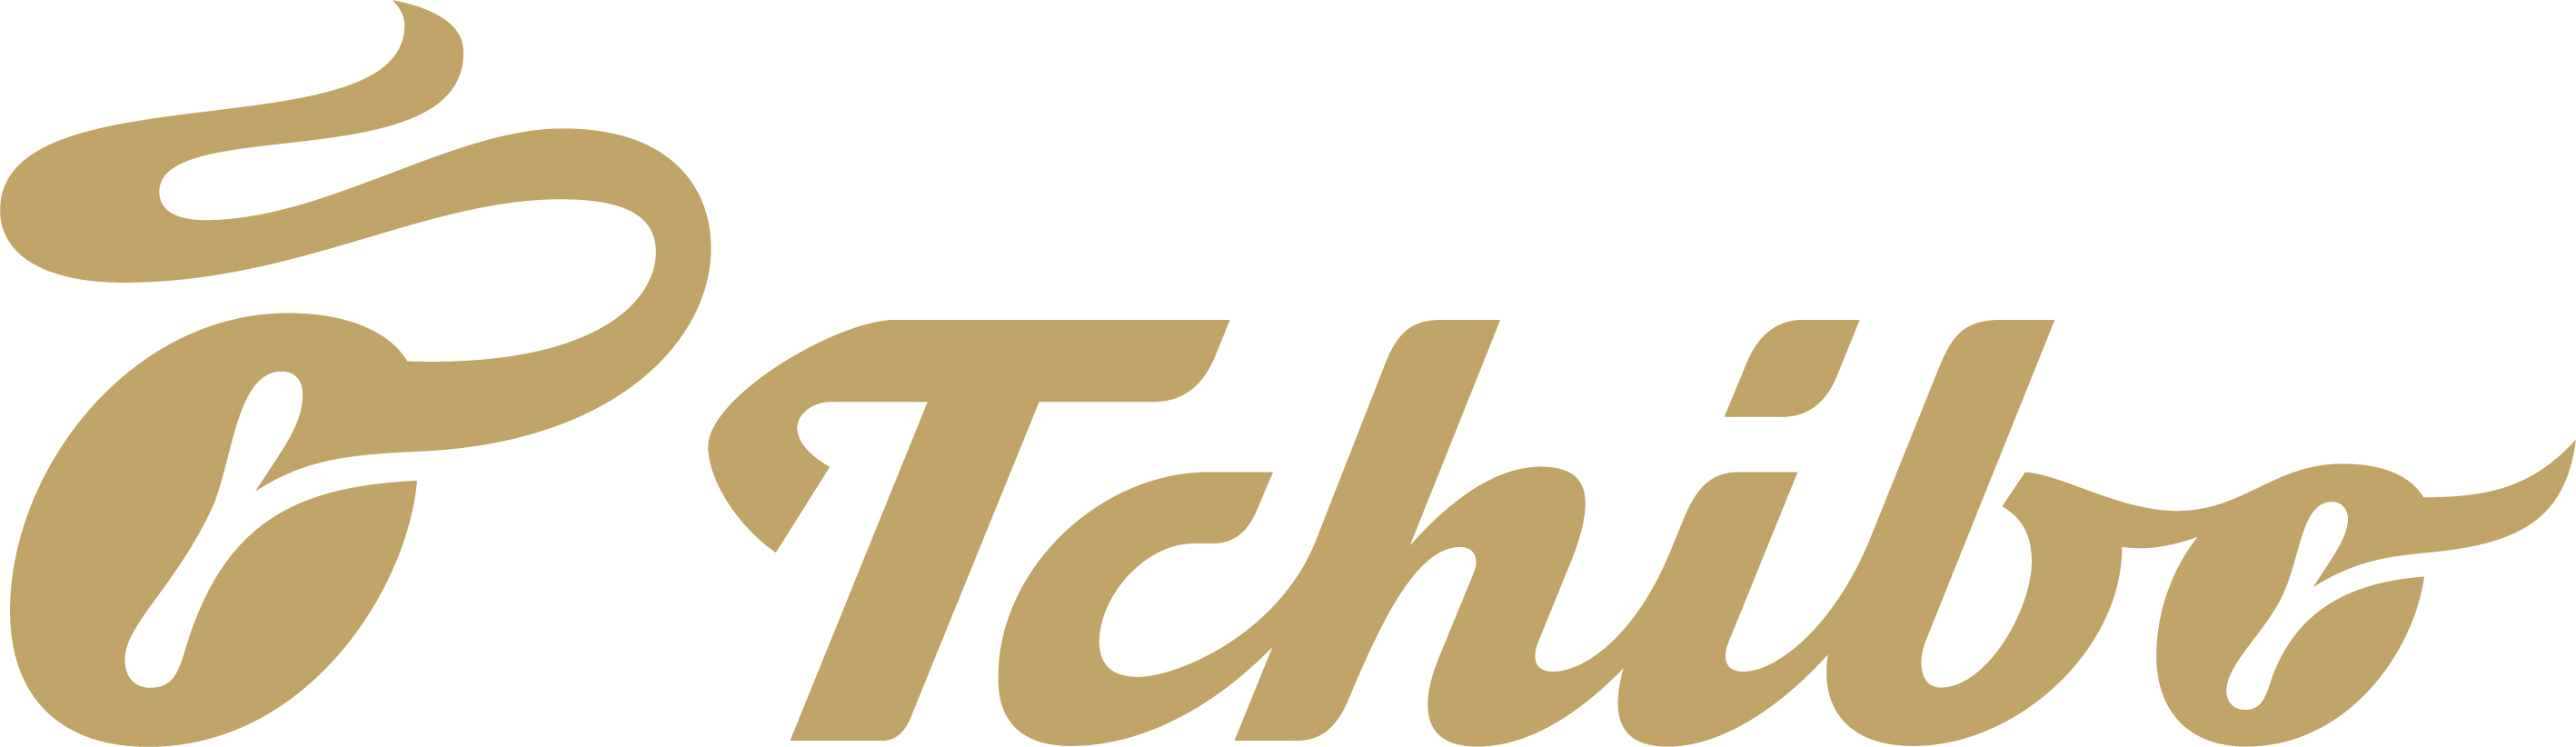 Tchibo Logo hor Gold dark sRGB3